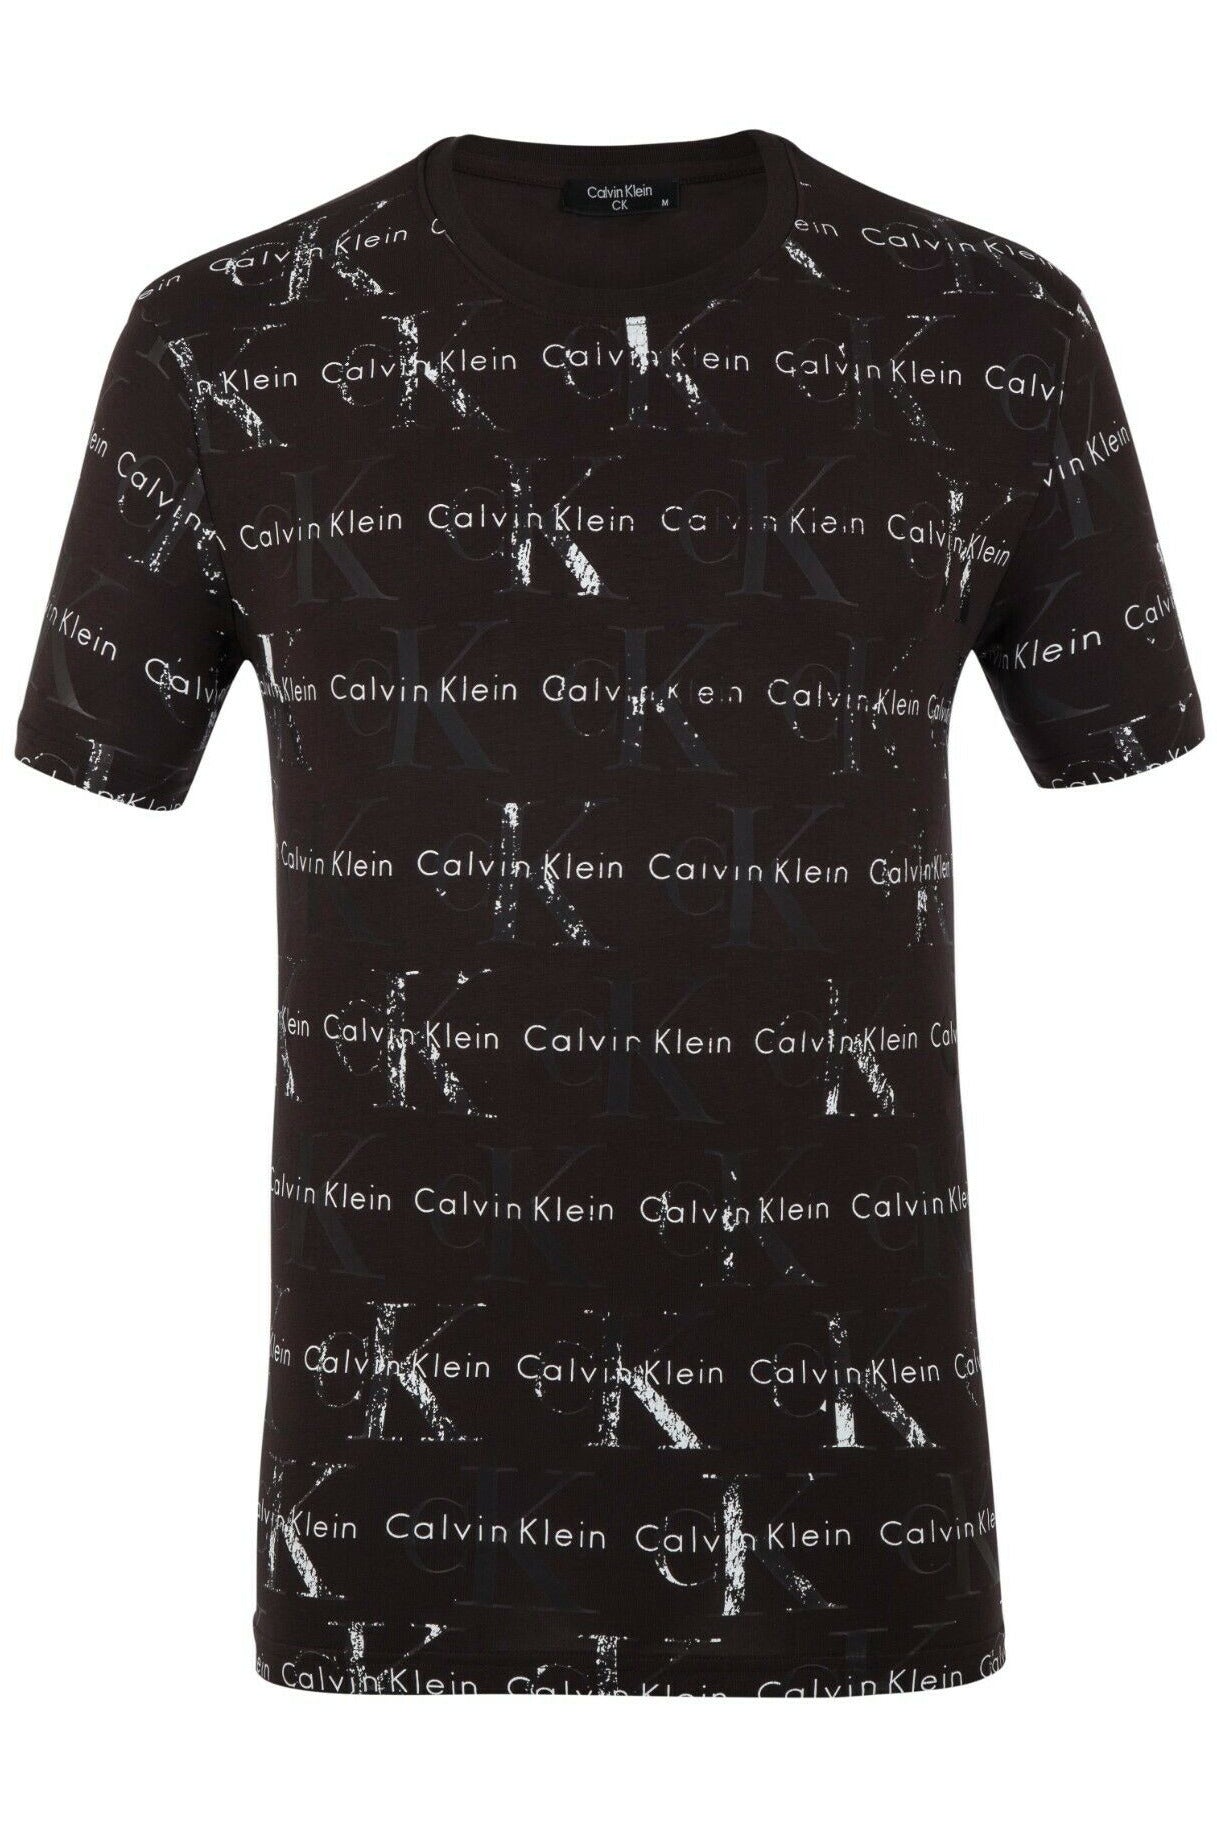 CALVIN KLEIN, Black Men's T-shirt